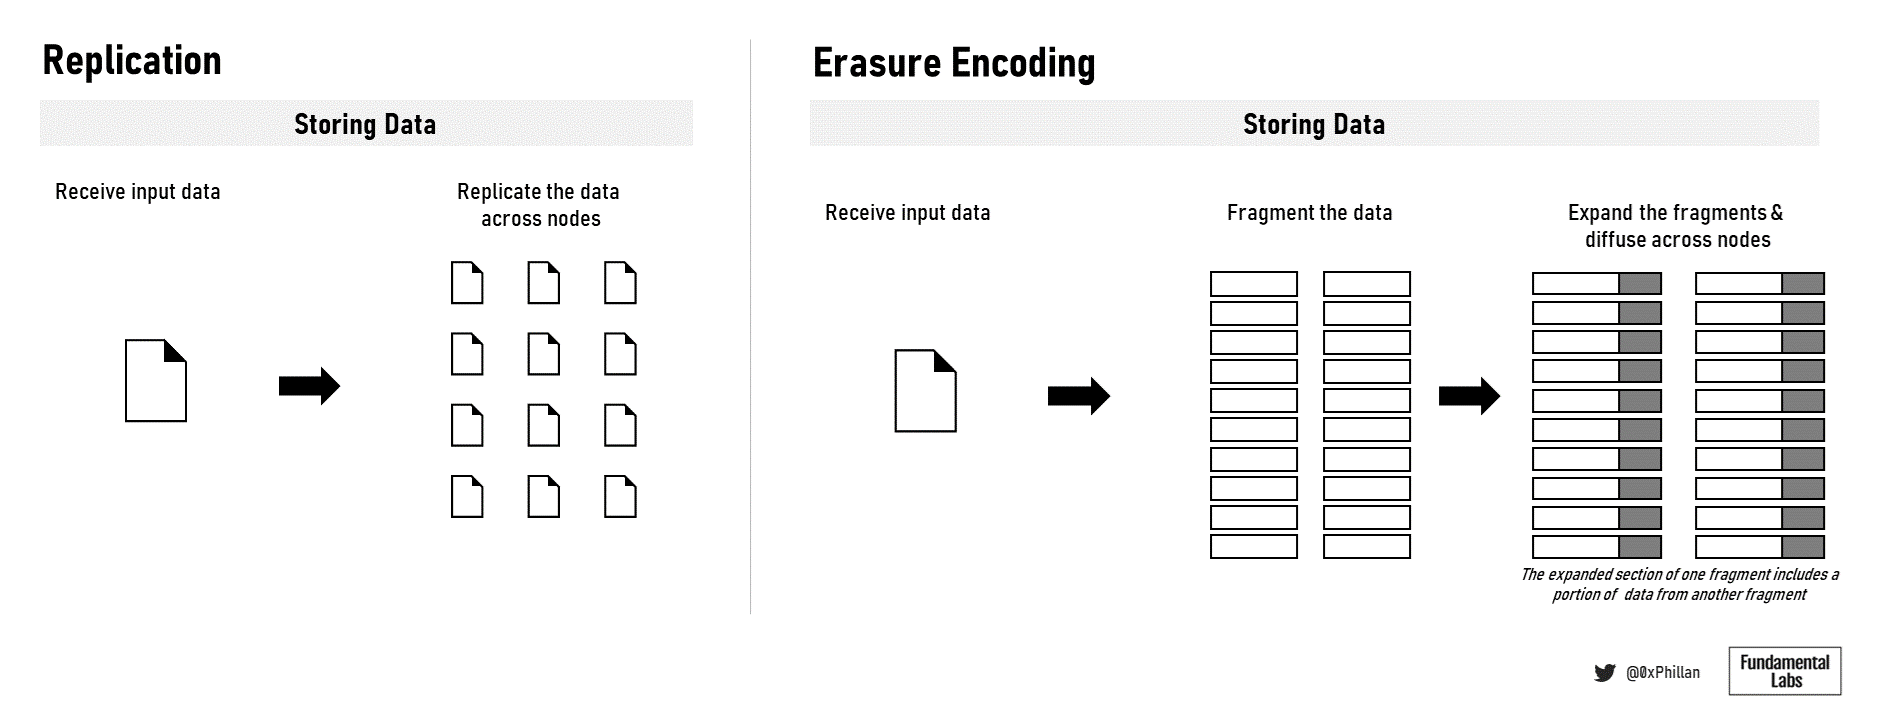 Figure 10: Data replication and erasure encoding of data